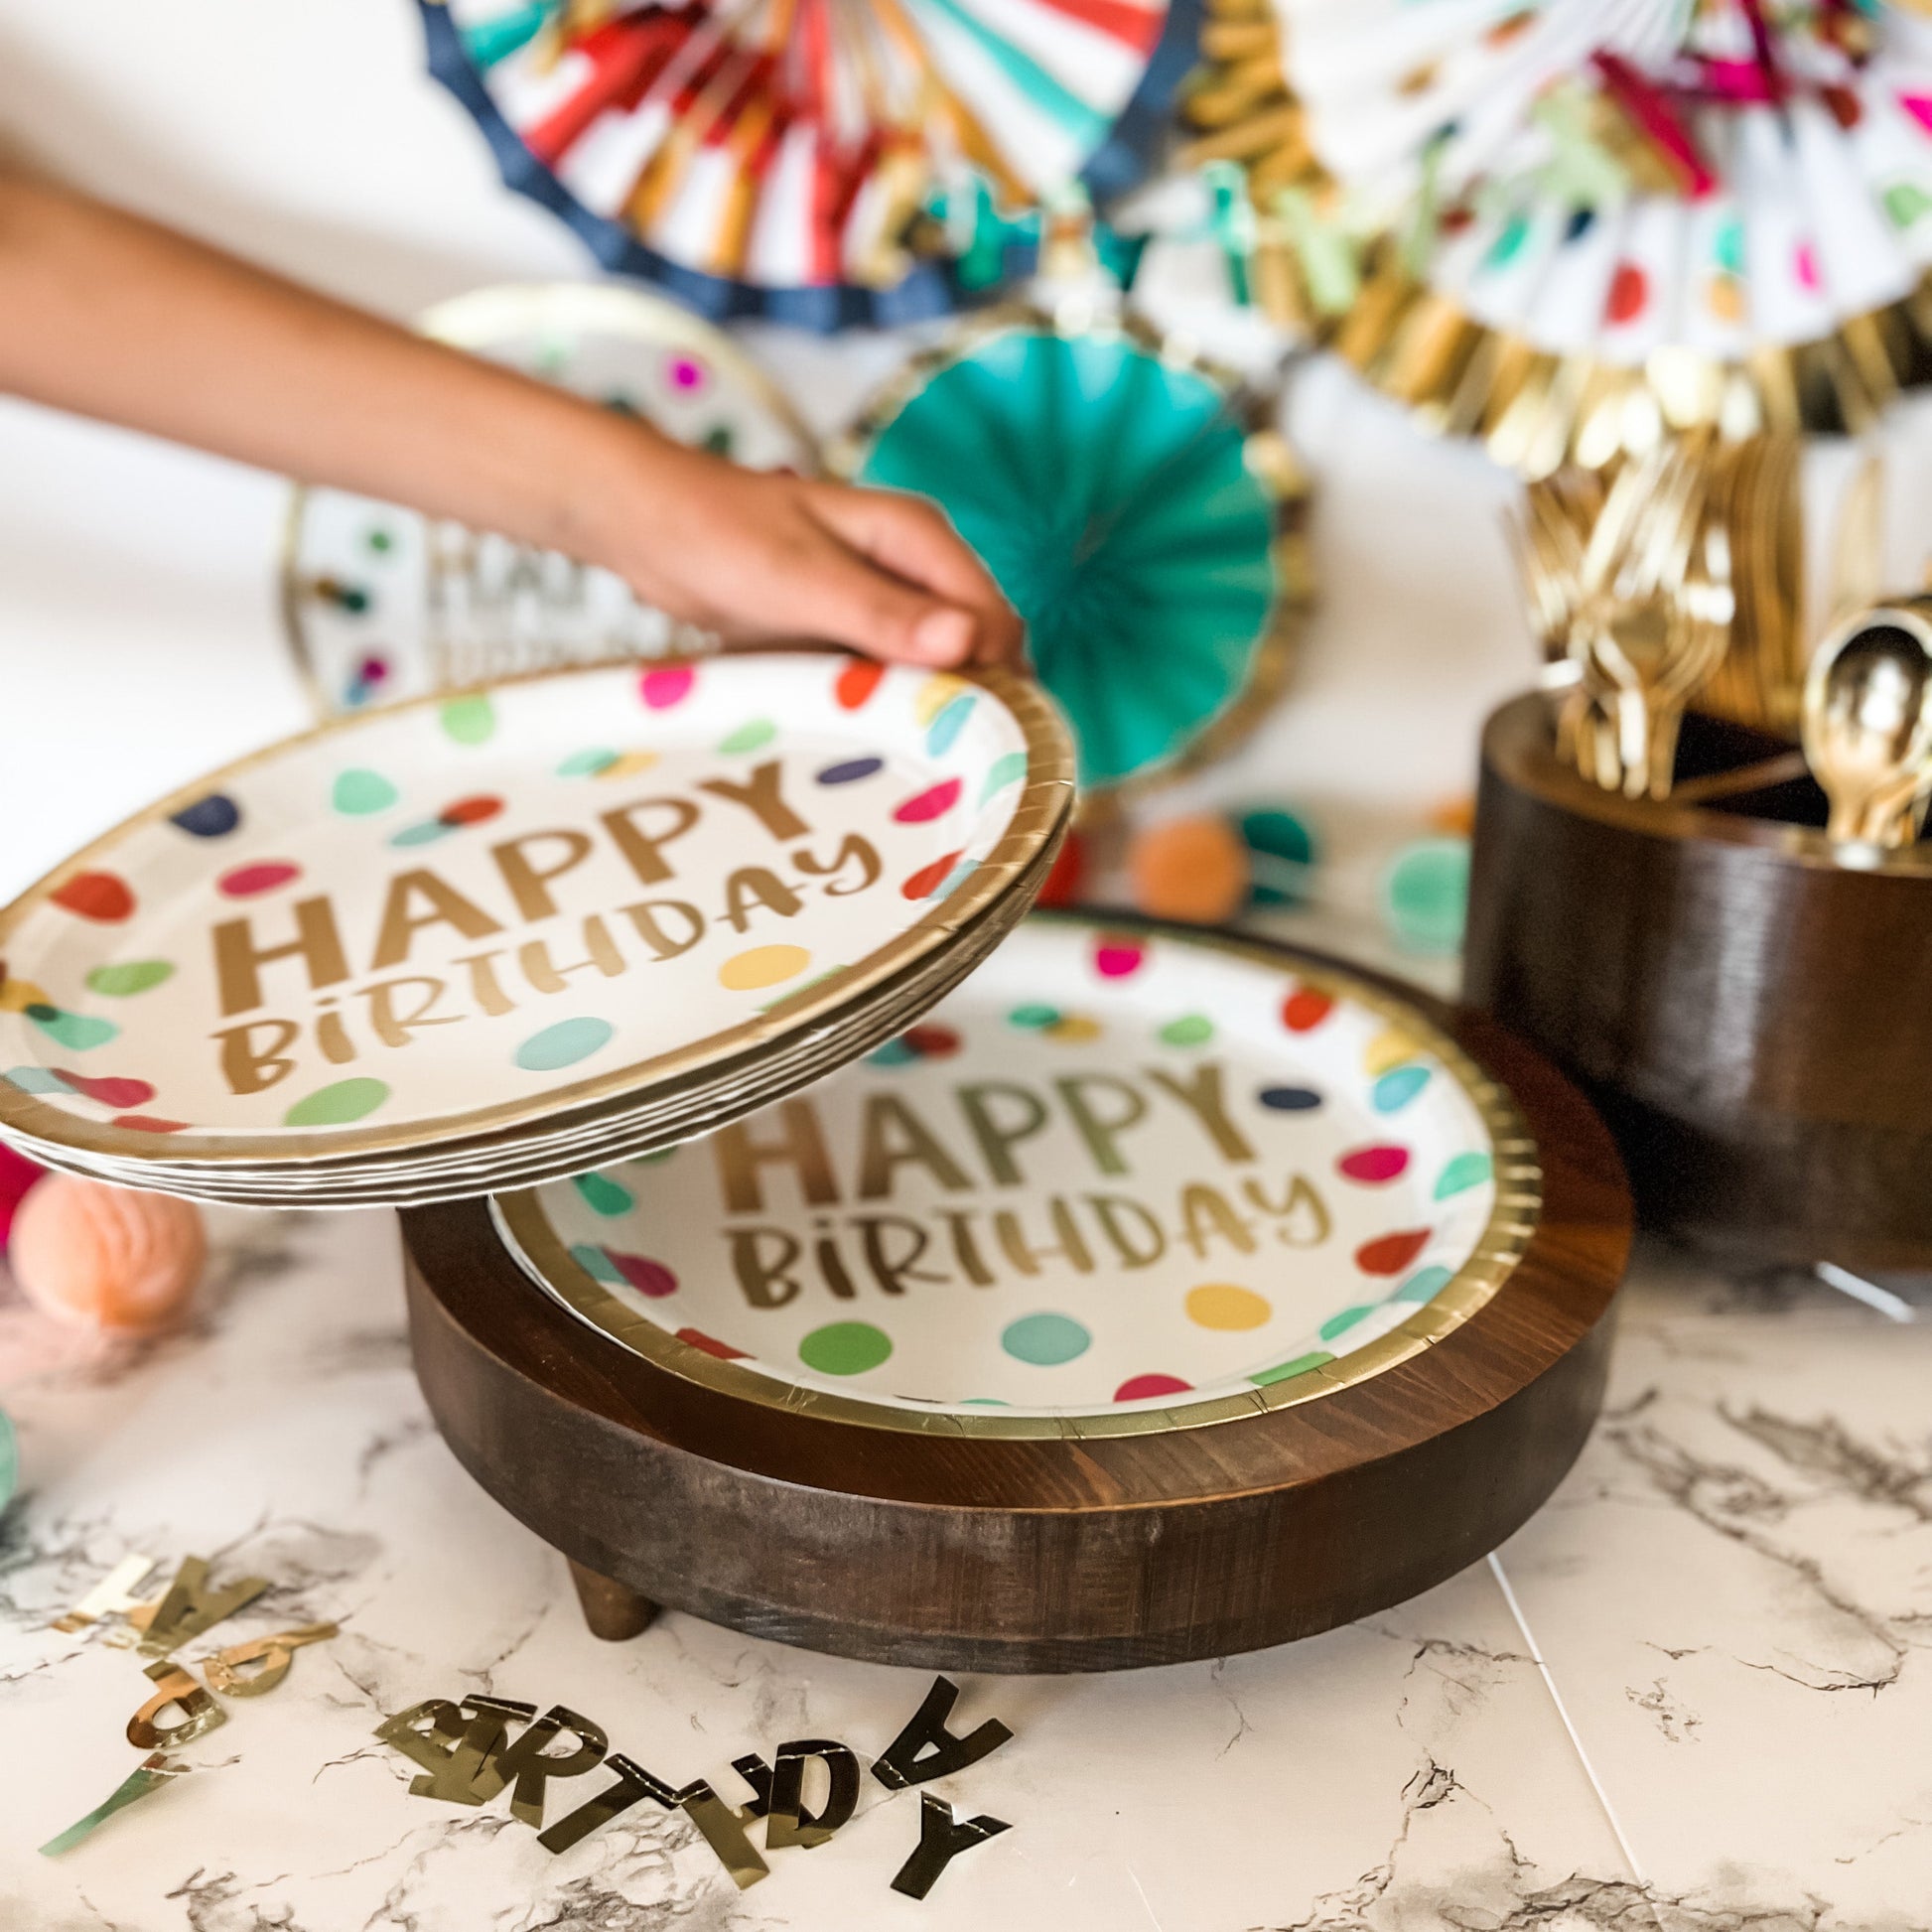 Party & Celebration Let's Celebrate! Plate Holder entertaining hosting wood serveware